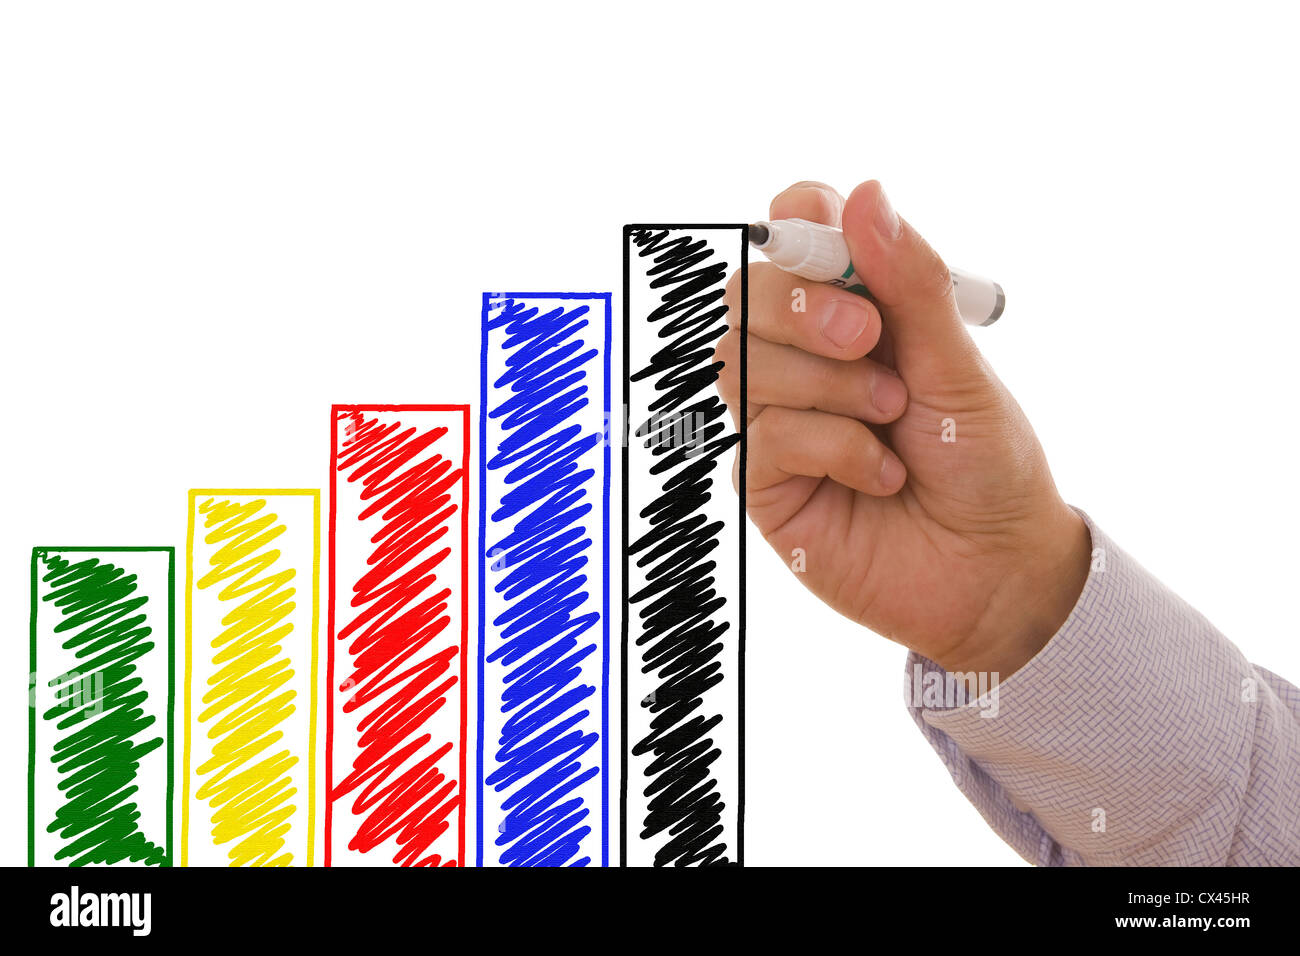 Man drawing an increasing bar/line graph - Business concept Stock Photo